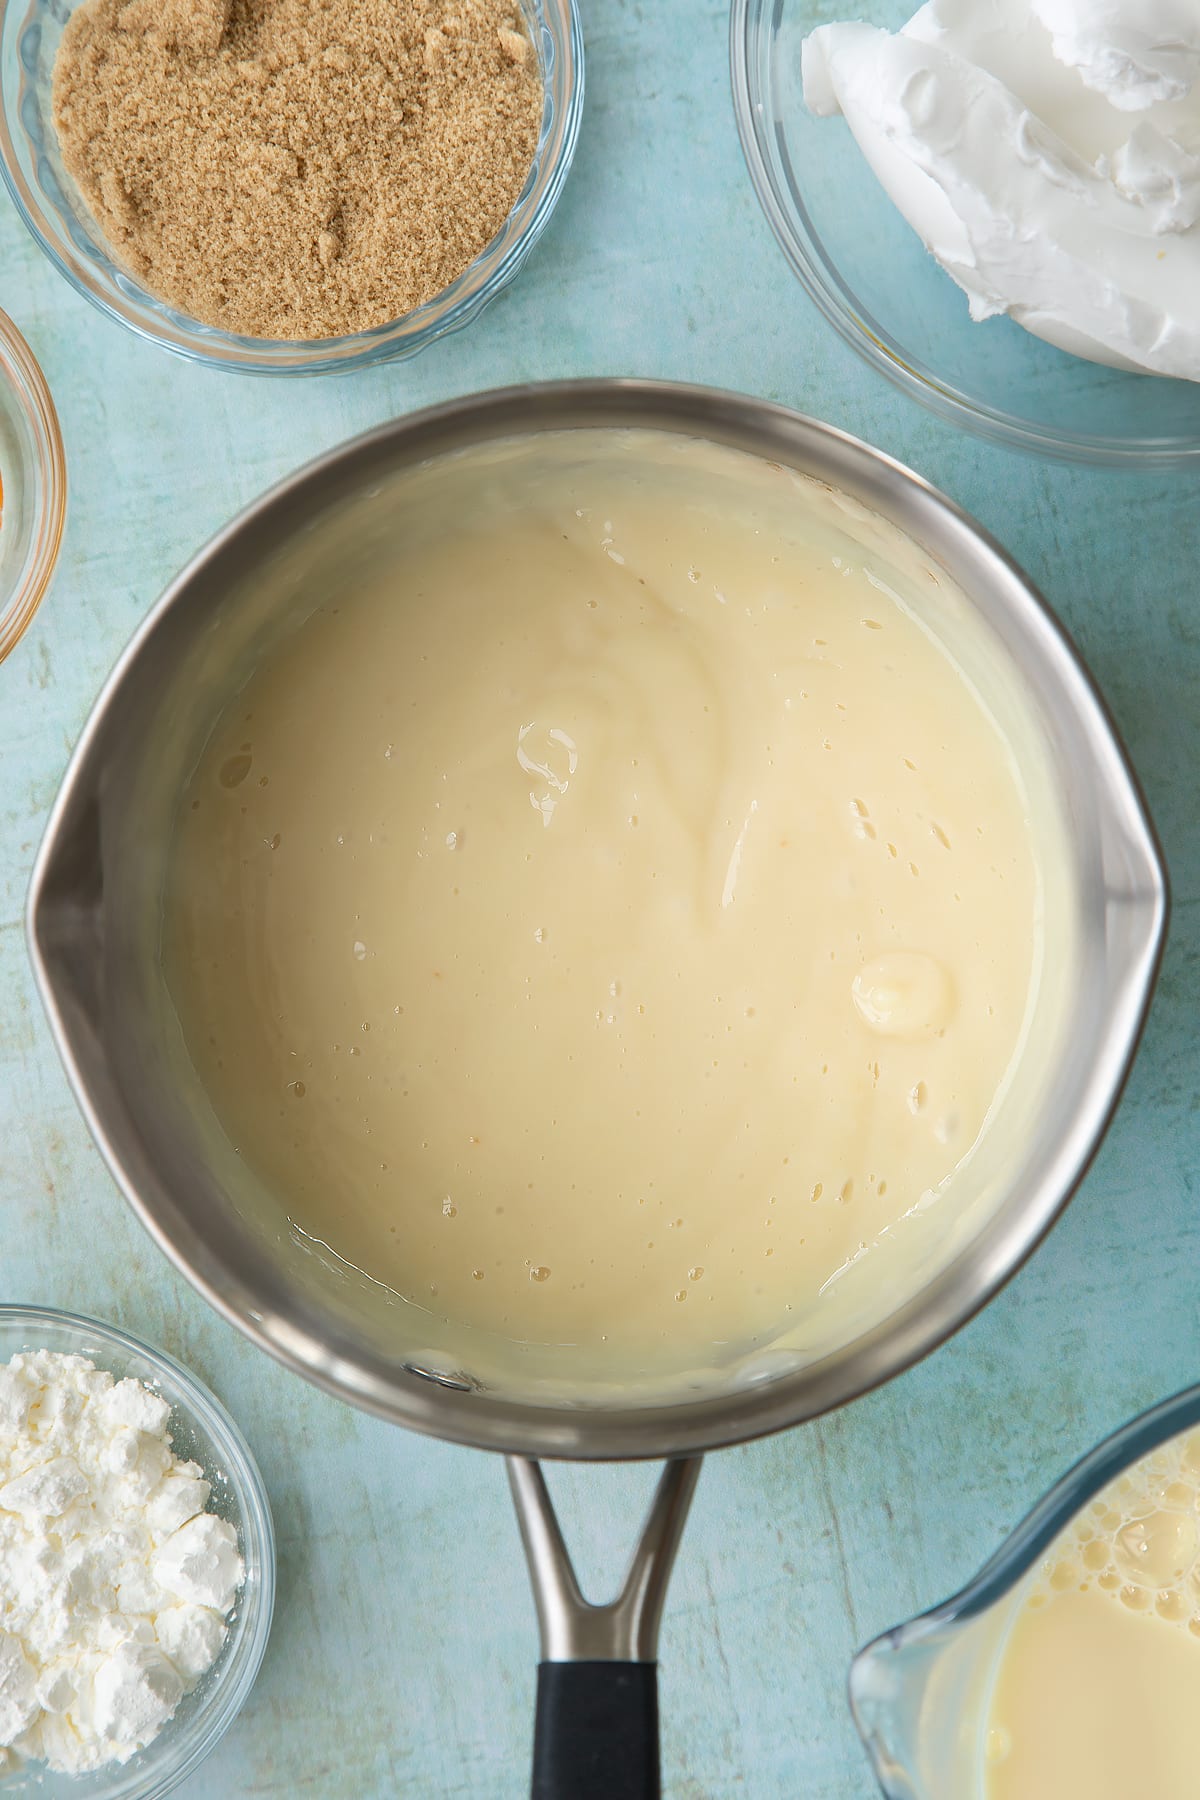 Soya milk, vanilla, sugar and cornflour thickened together in a pan. Ingredients to make vegan custard surround the pan.